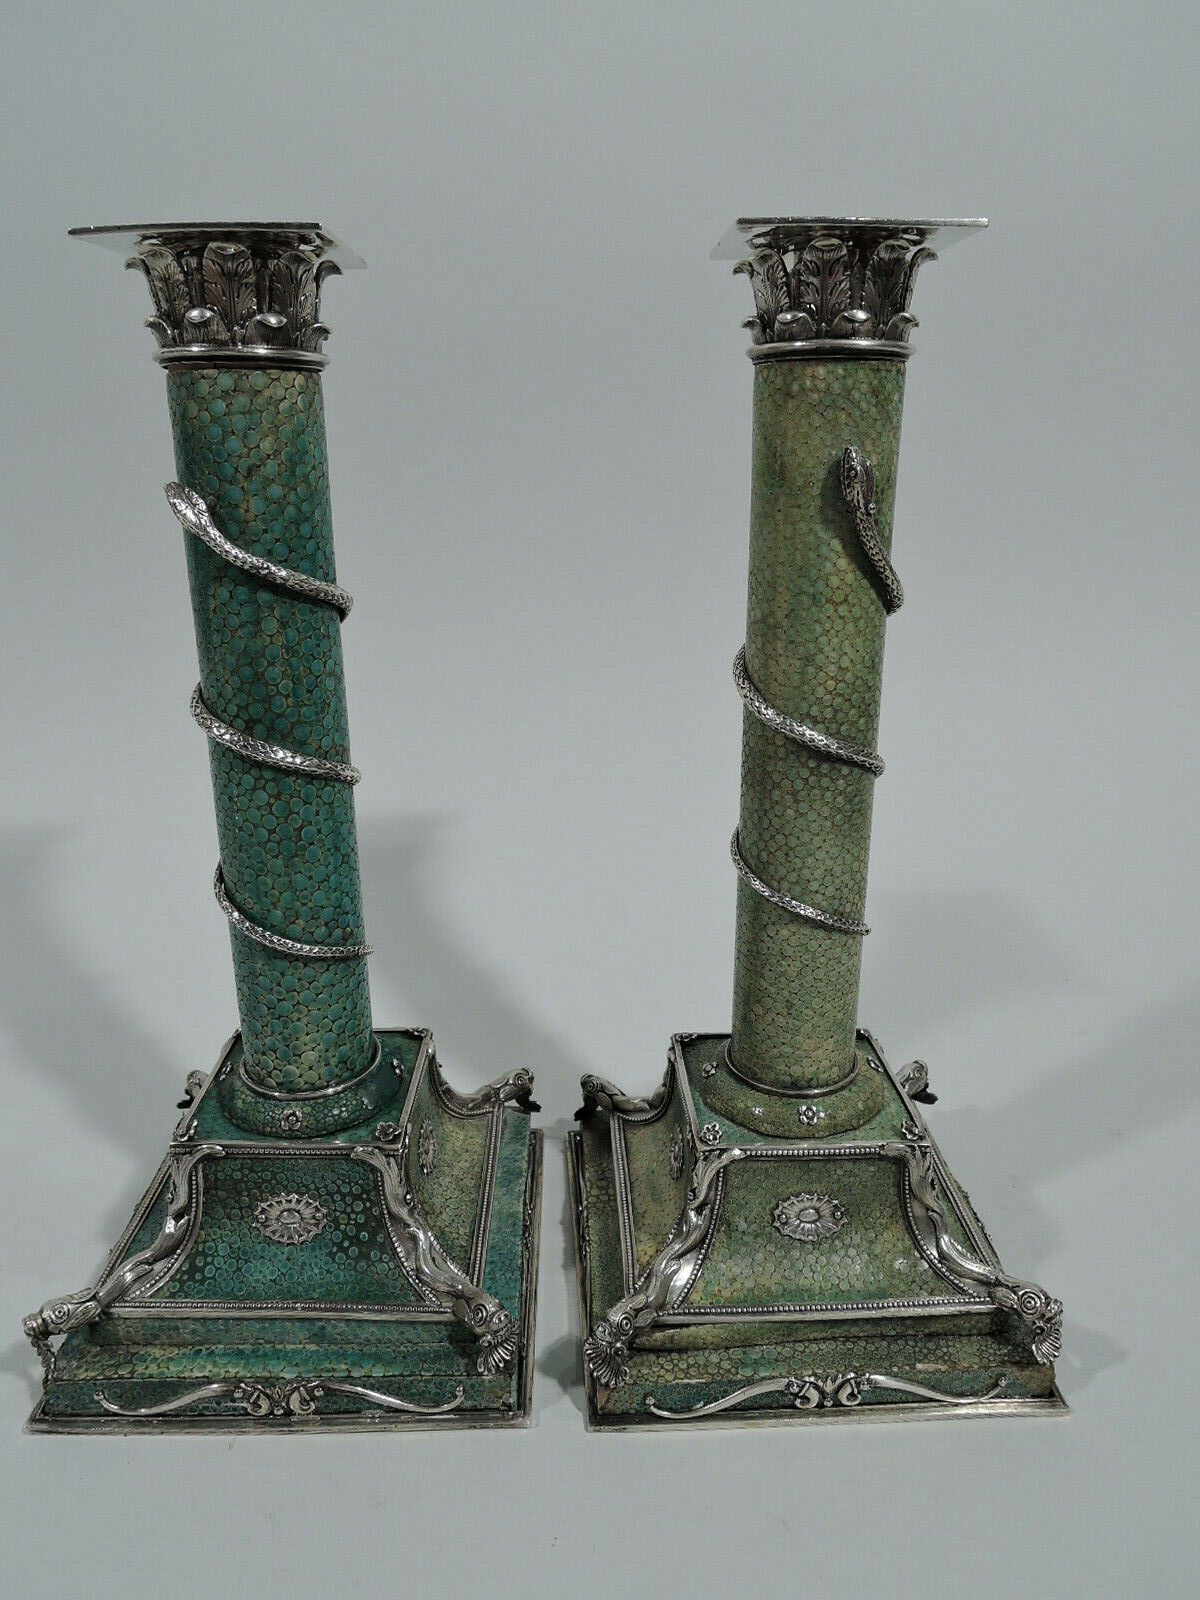 Antique Candlesticks - Corinthian Column Pair - European Silver Green Shagreen